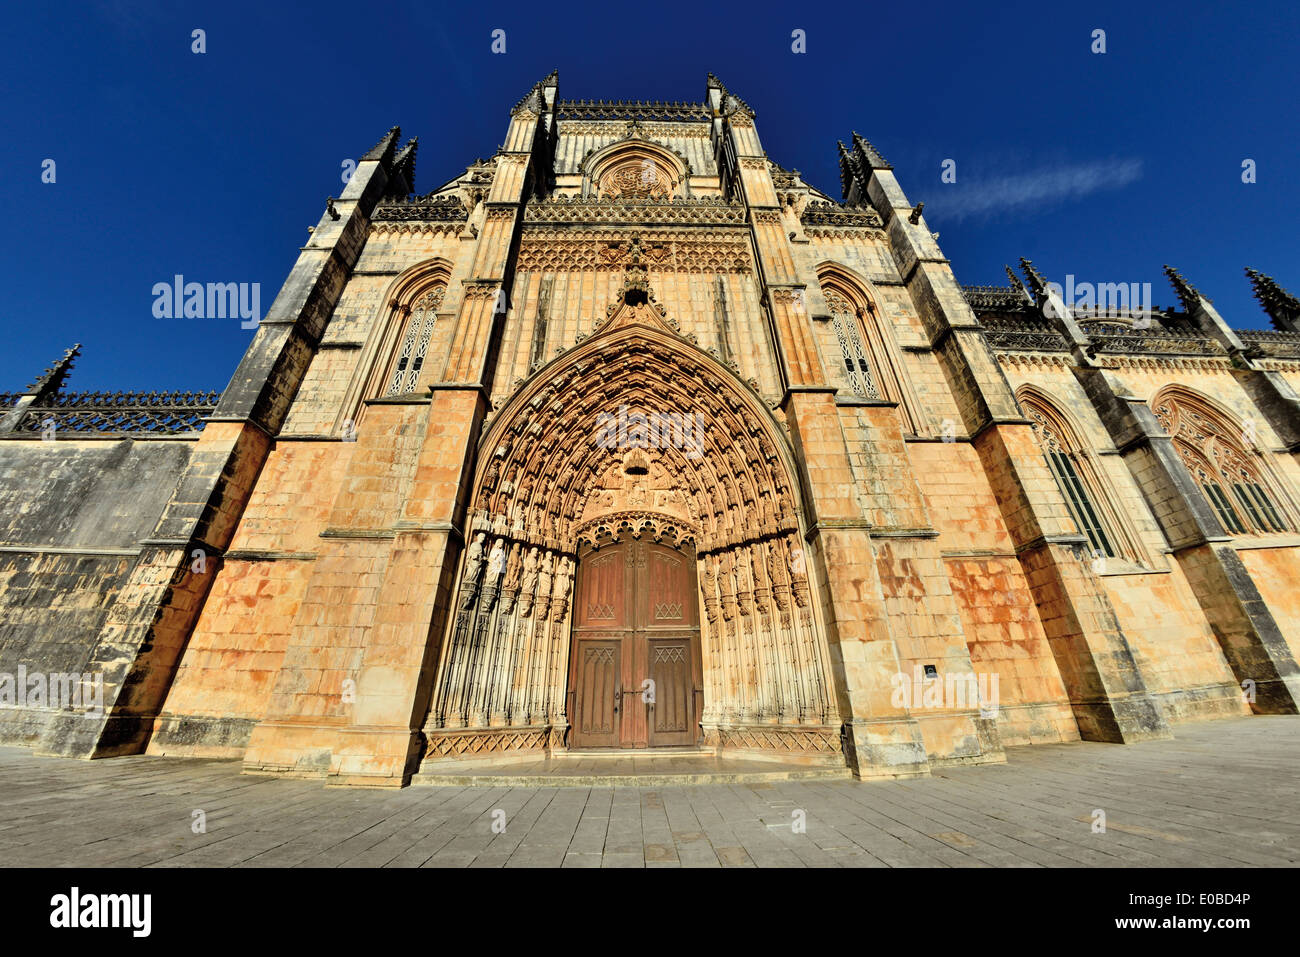 Portugal: Gothic gateway of the Monastery Santa Maria da Vitoria in Batalha Stock Photo